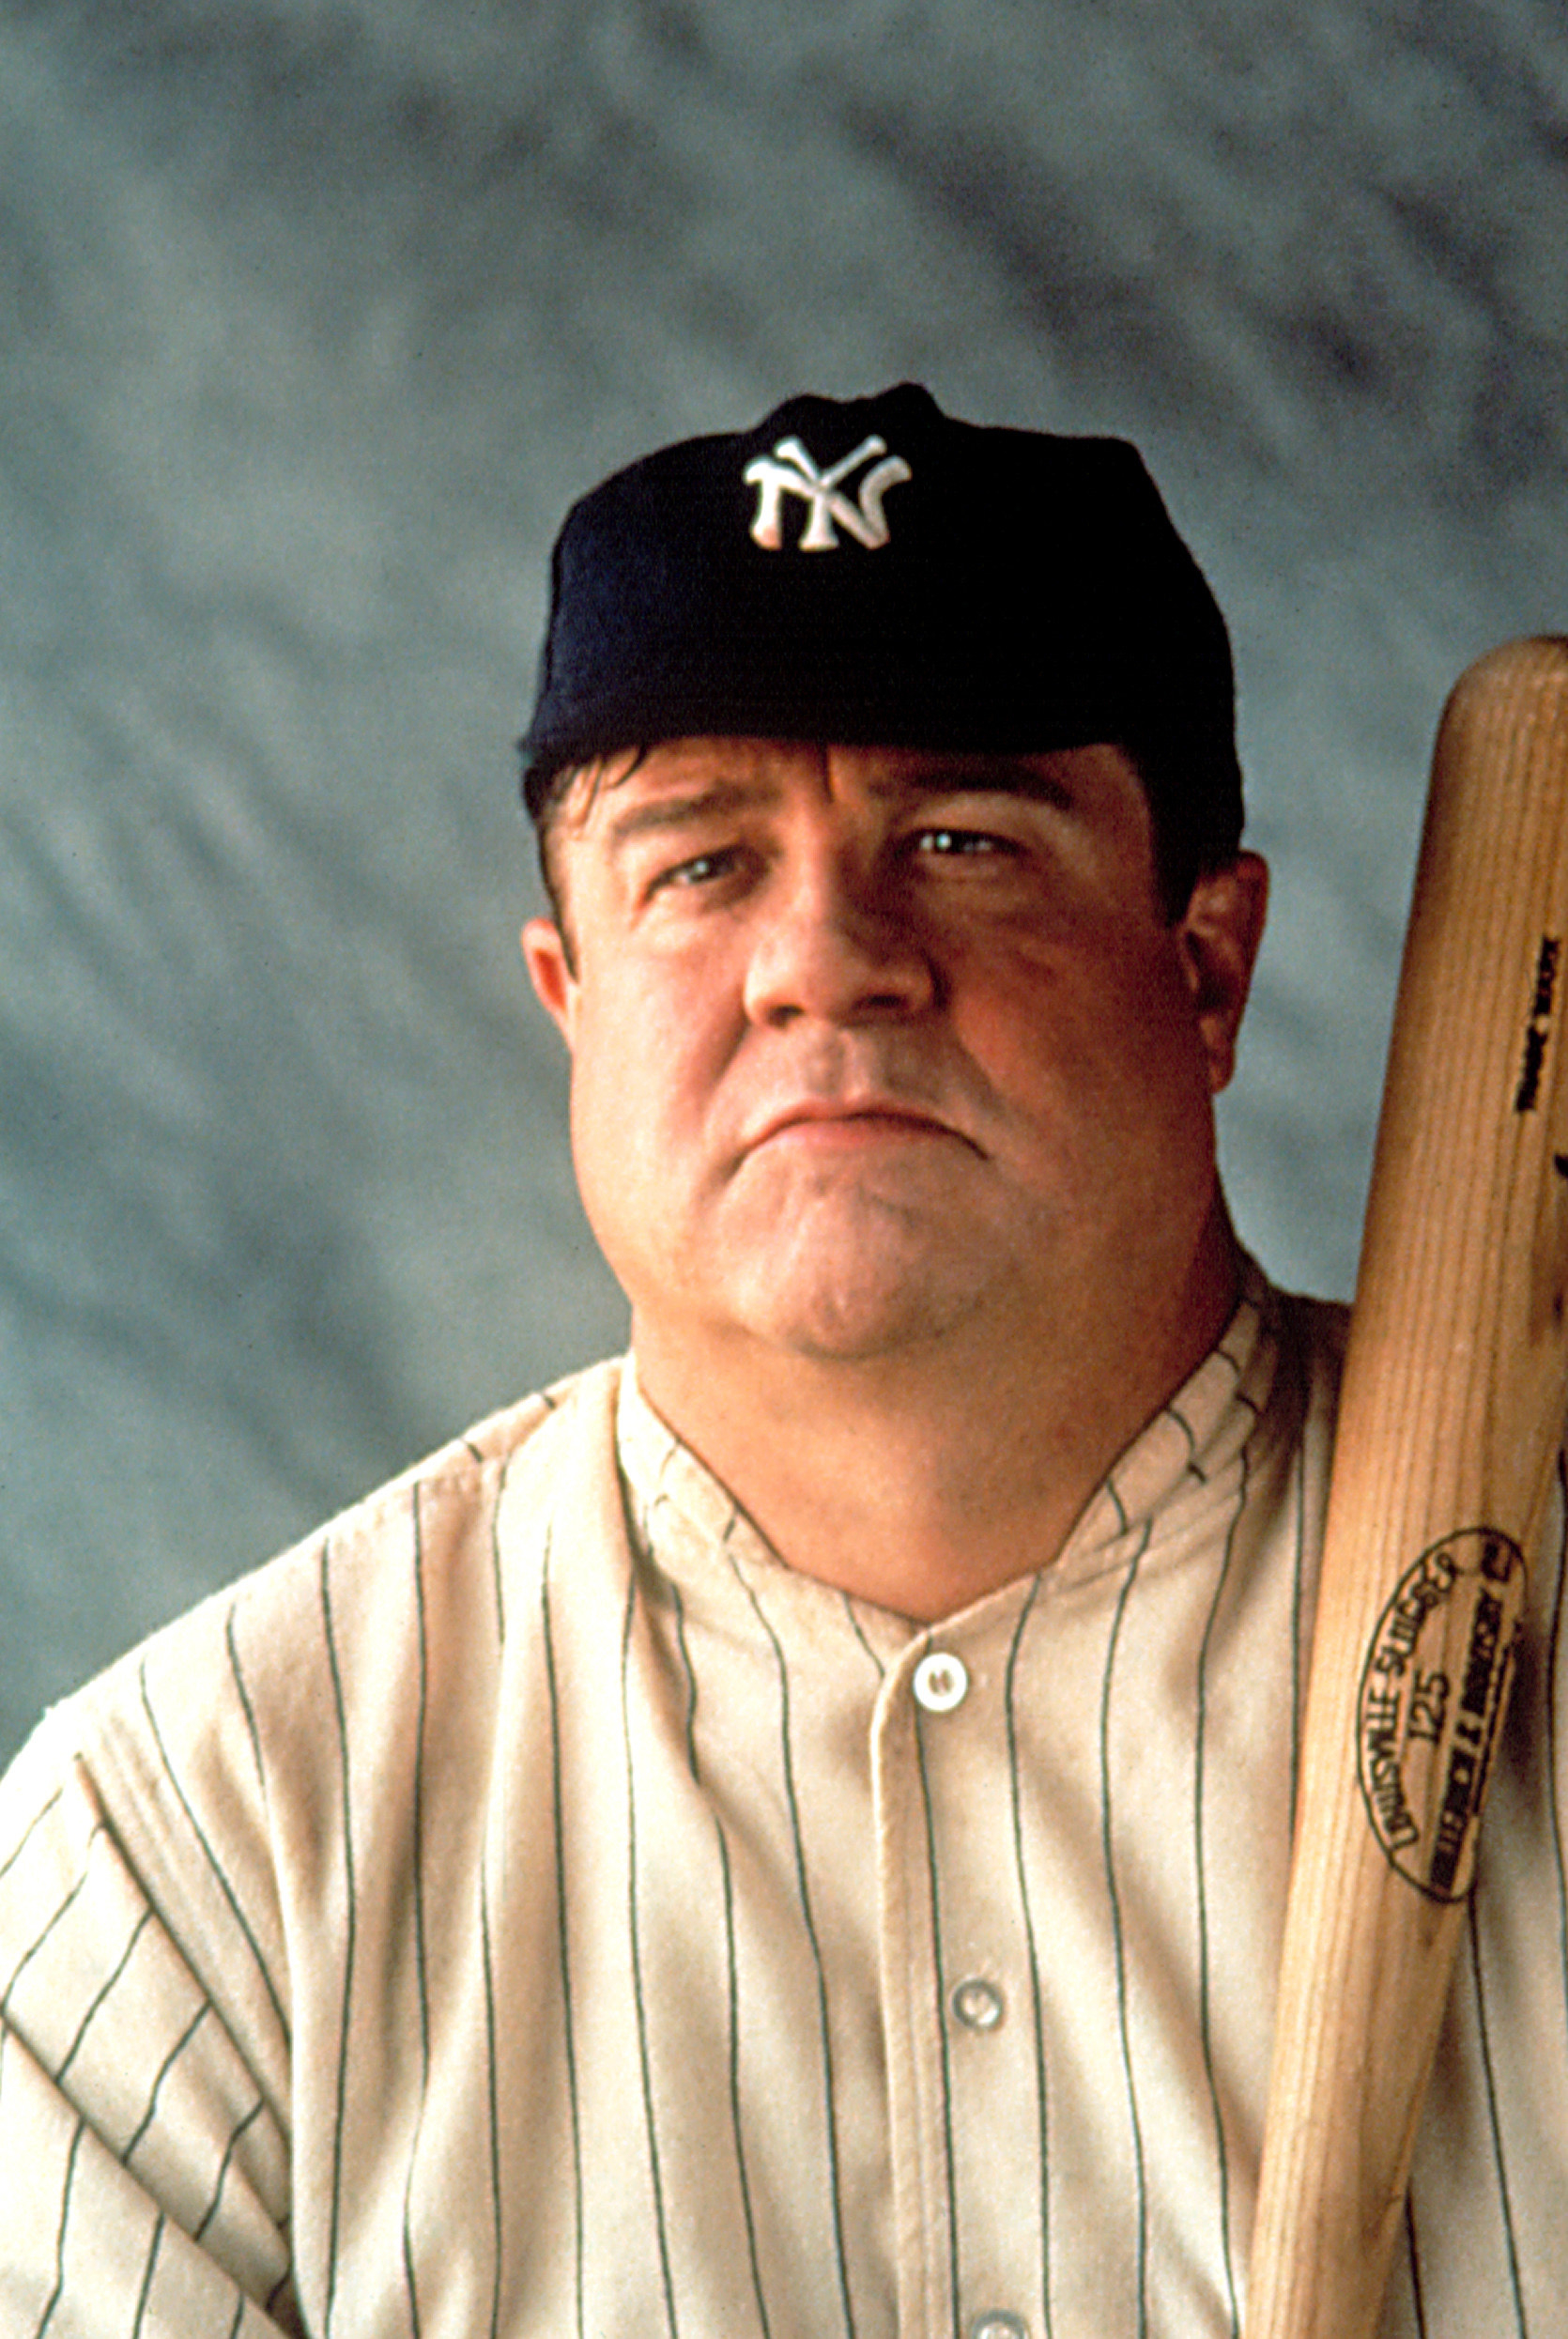 Close-up of John in a baseball uniform and holding a bat